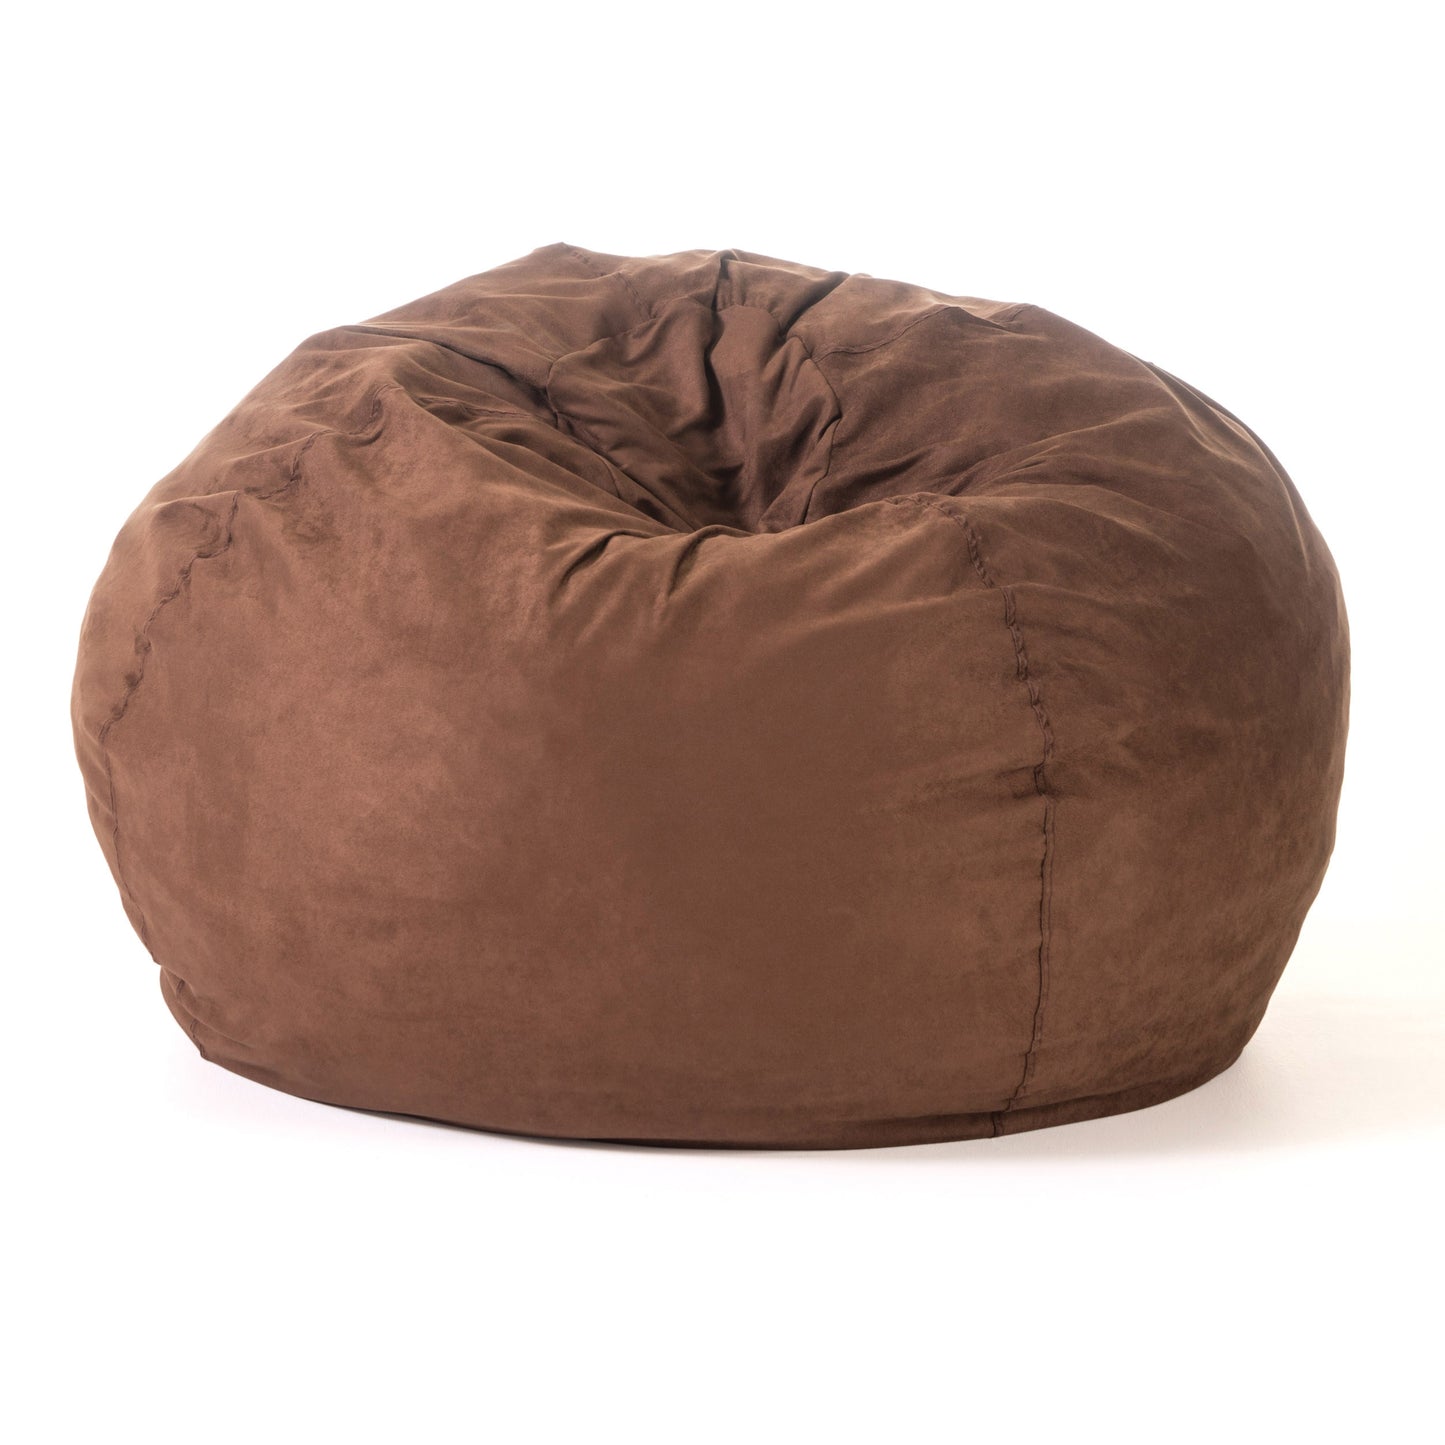 Grandiose Big Ultra Soft Bean Bag Chair